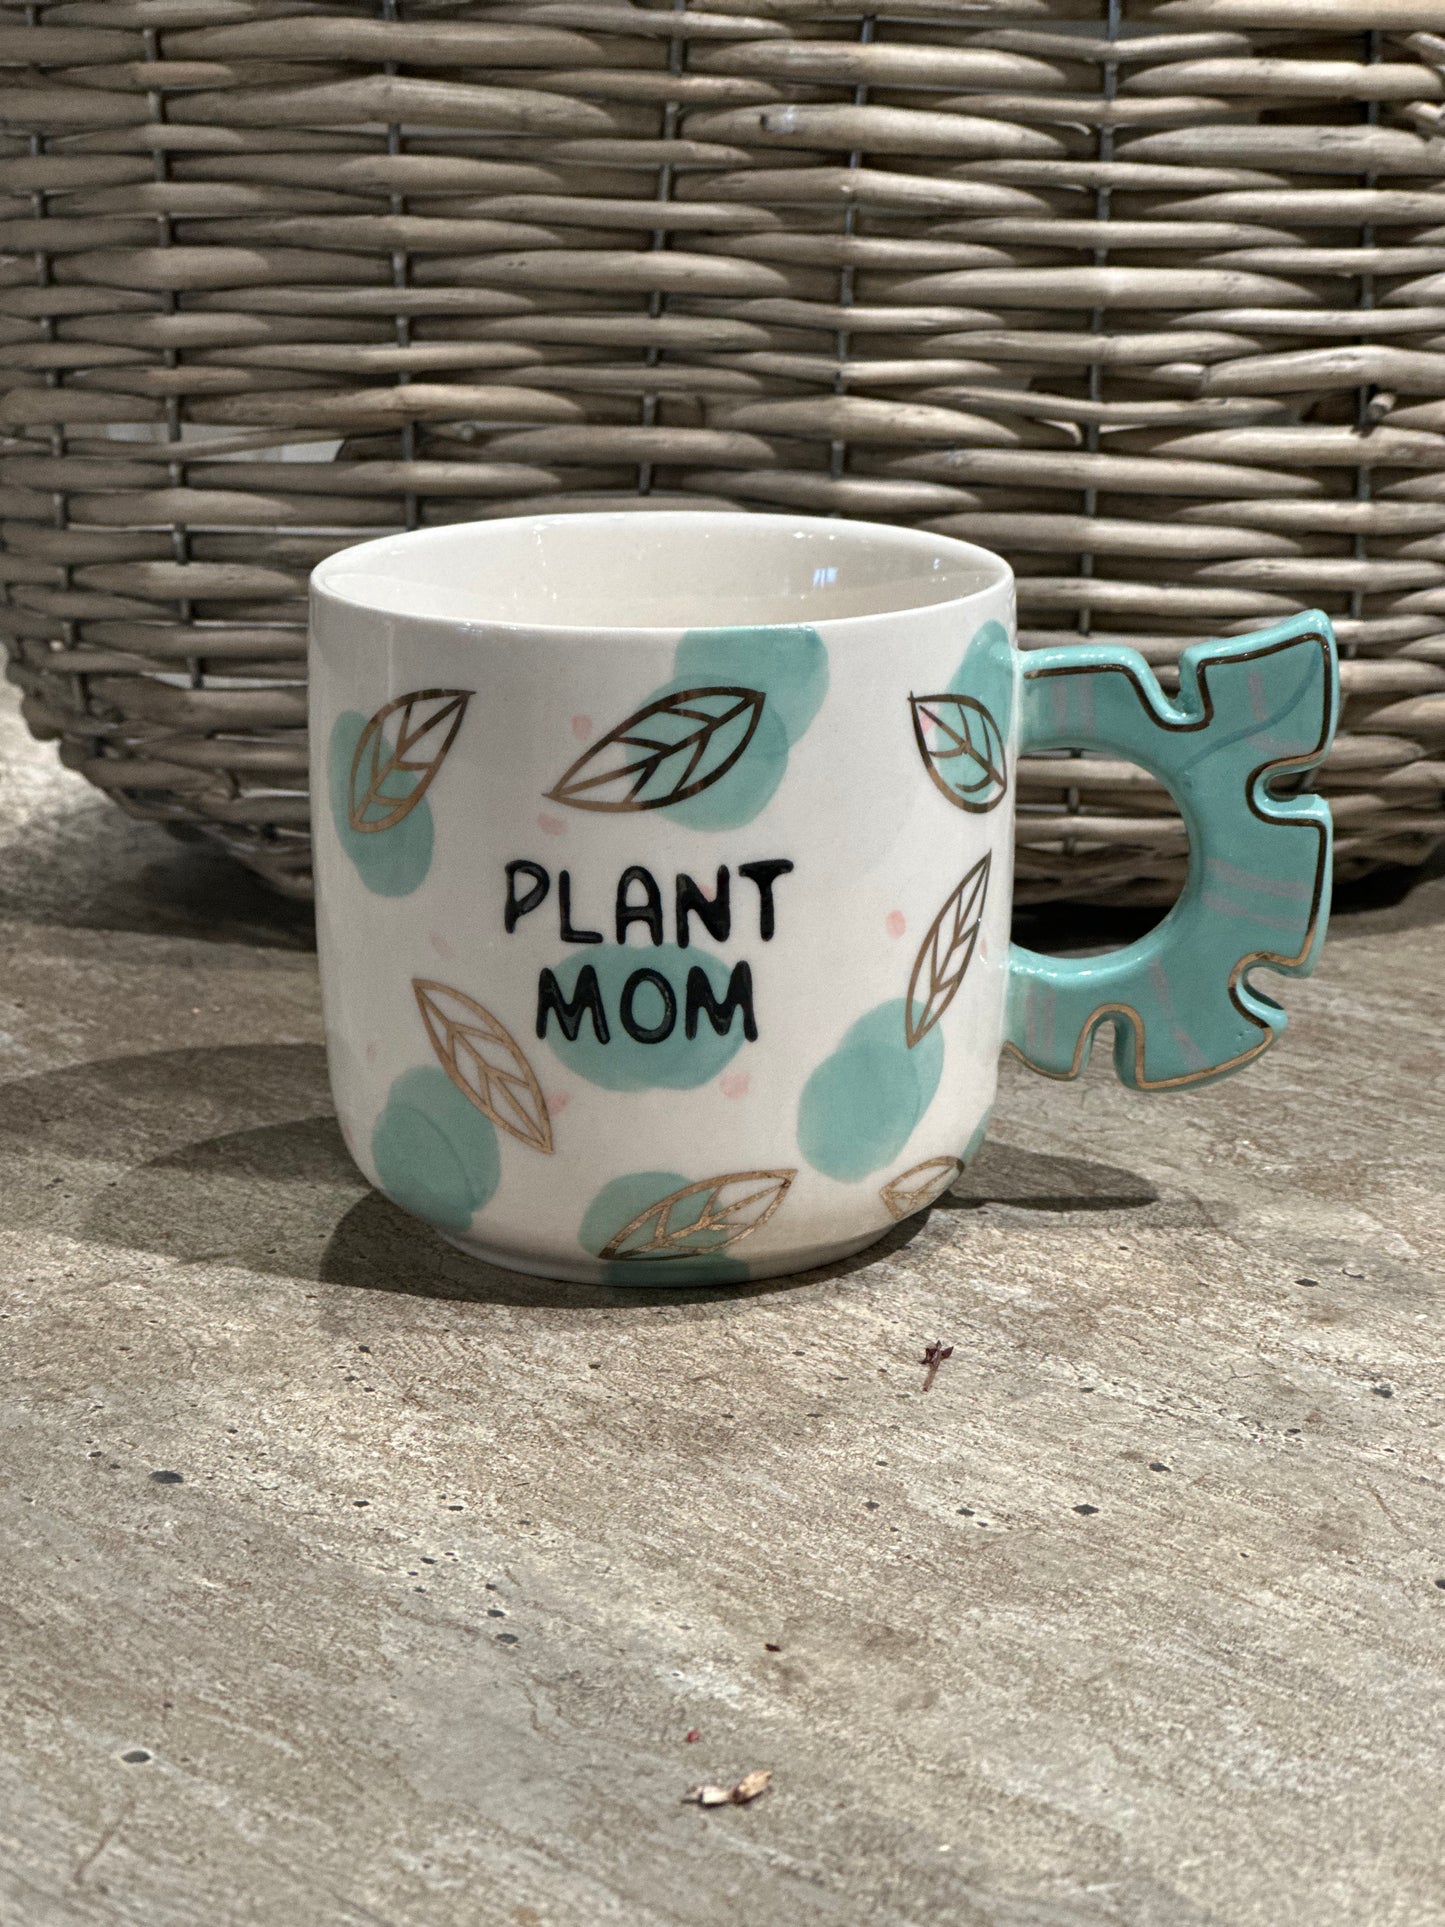 Plant mom mug